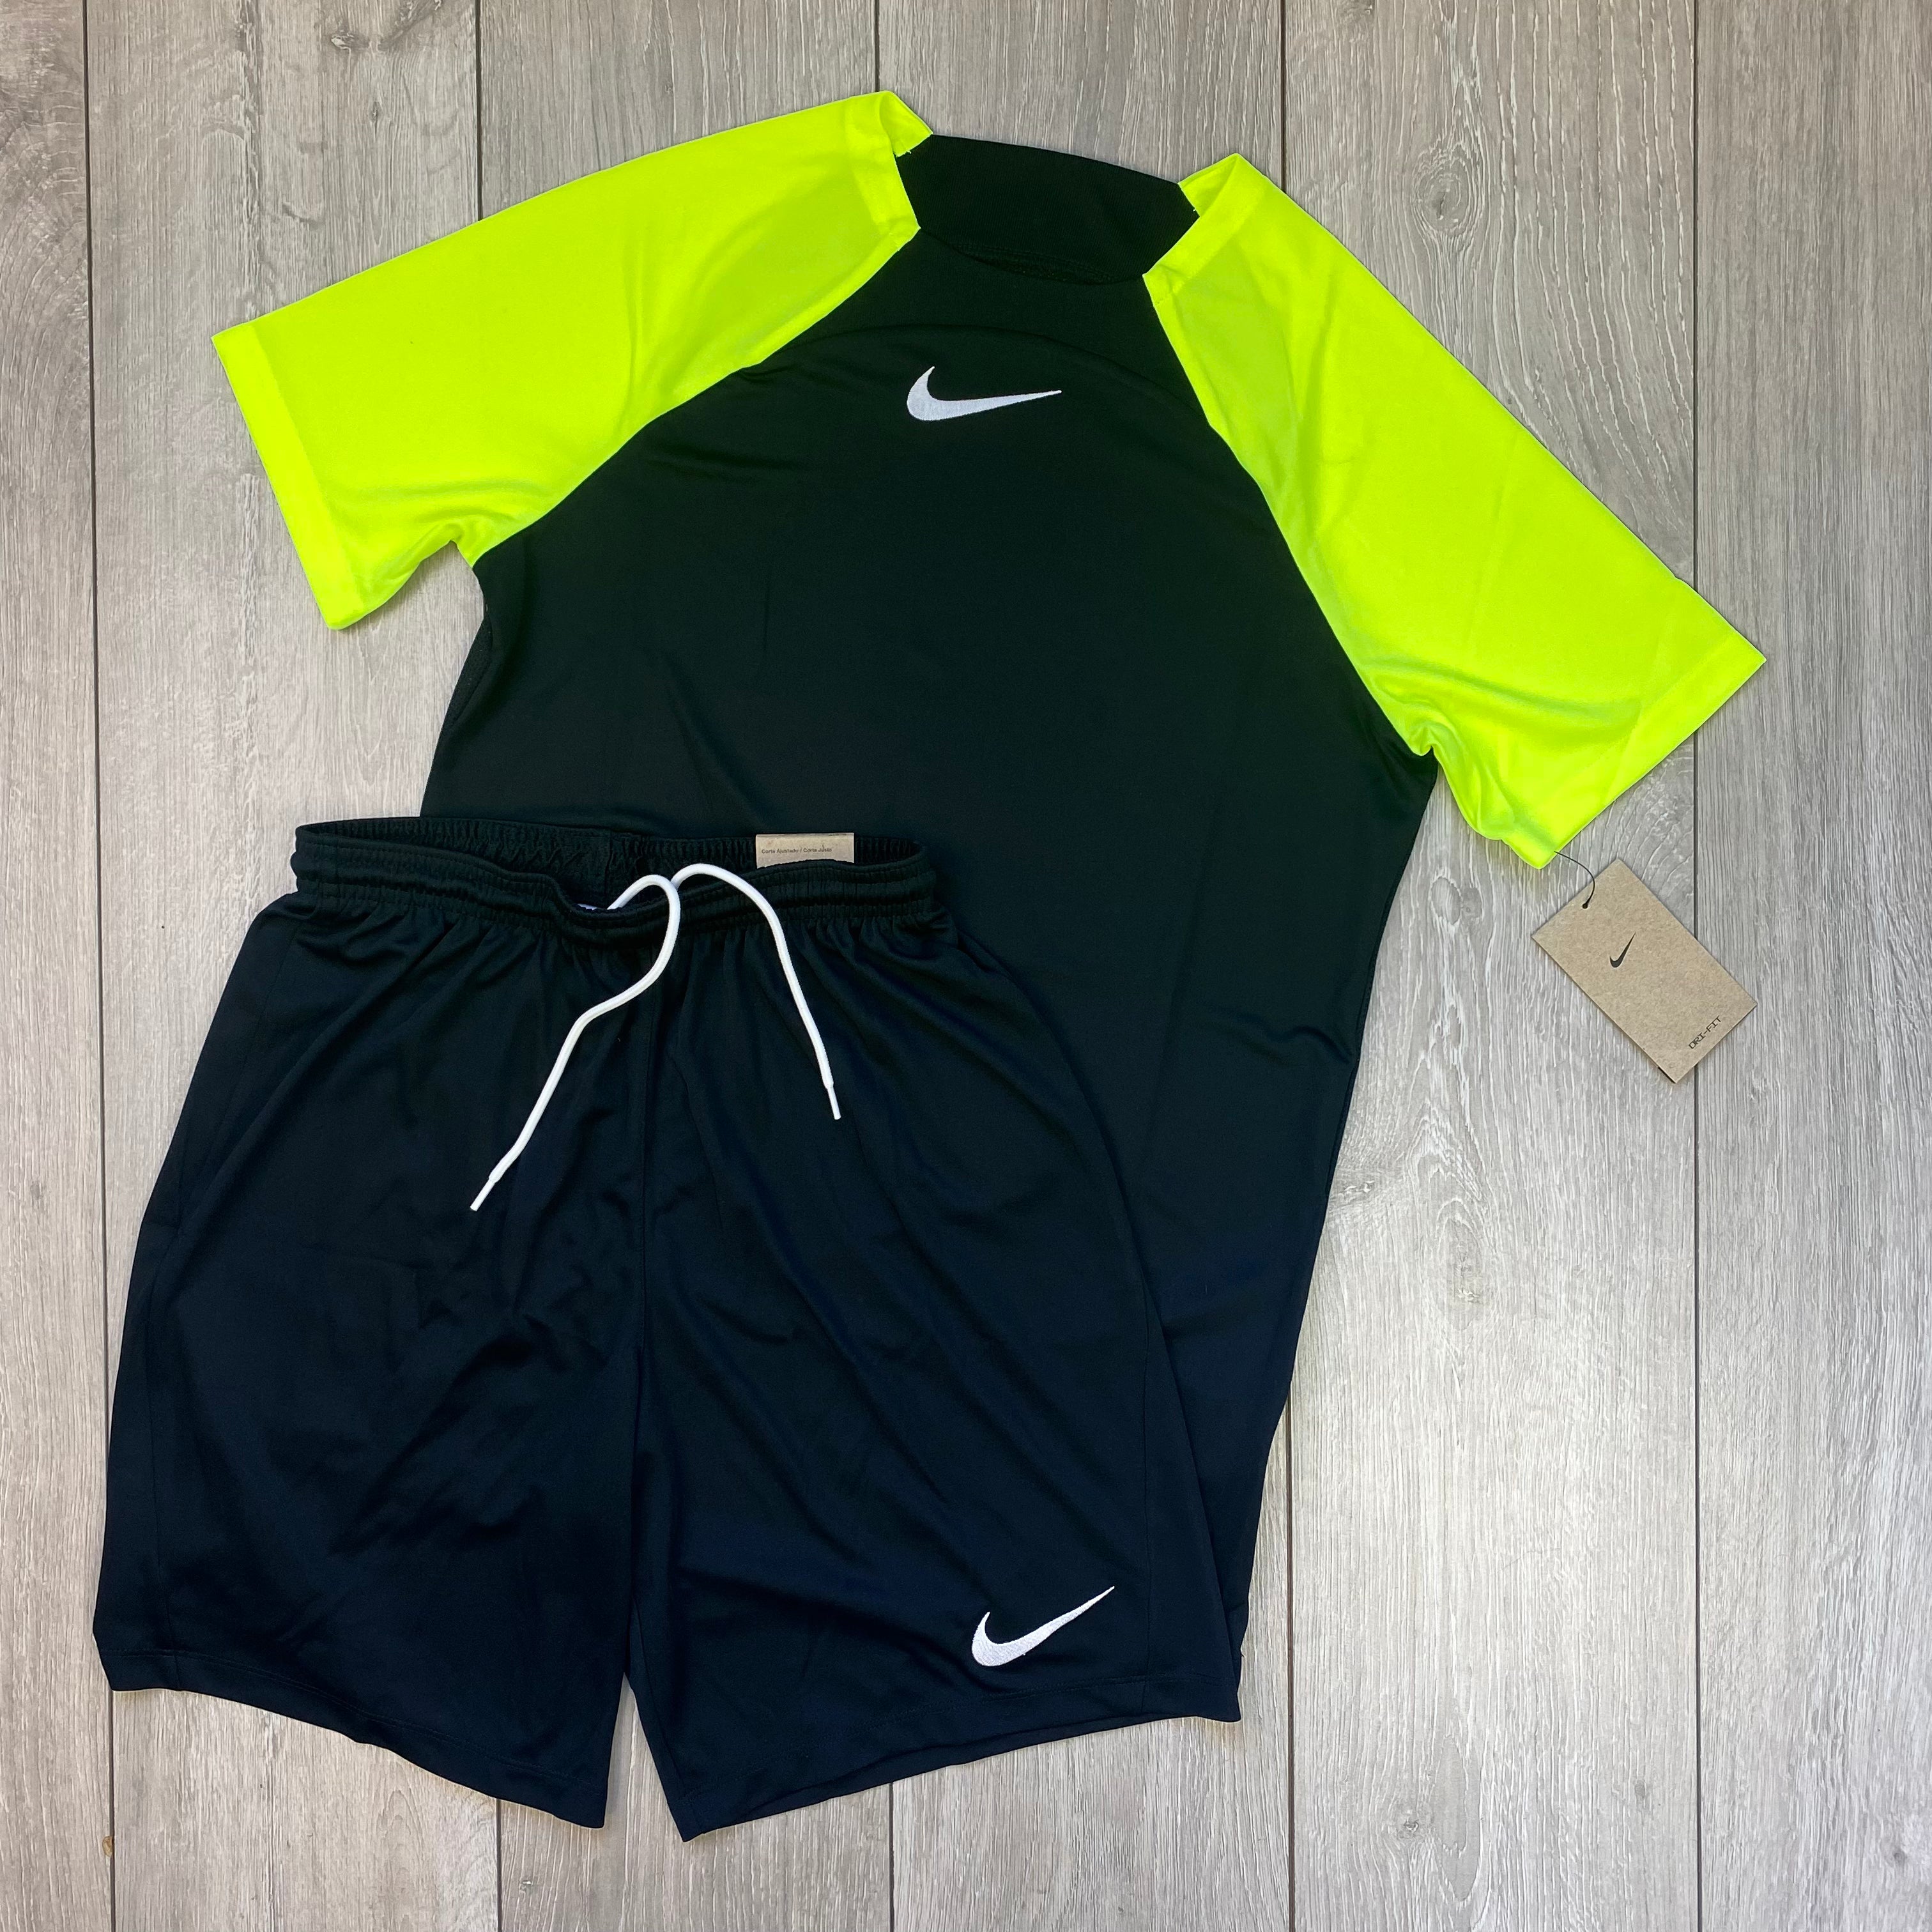 Nike Dri-Fit Set - Volt/Black